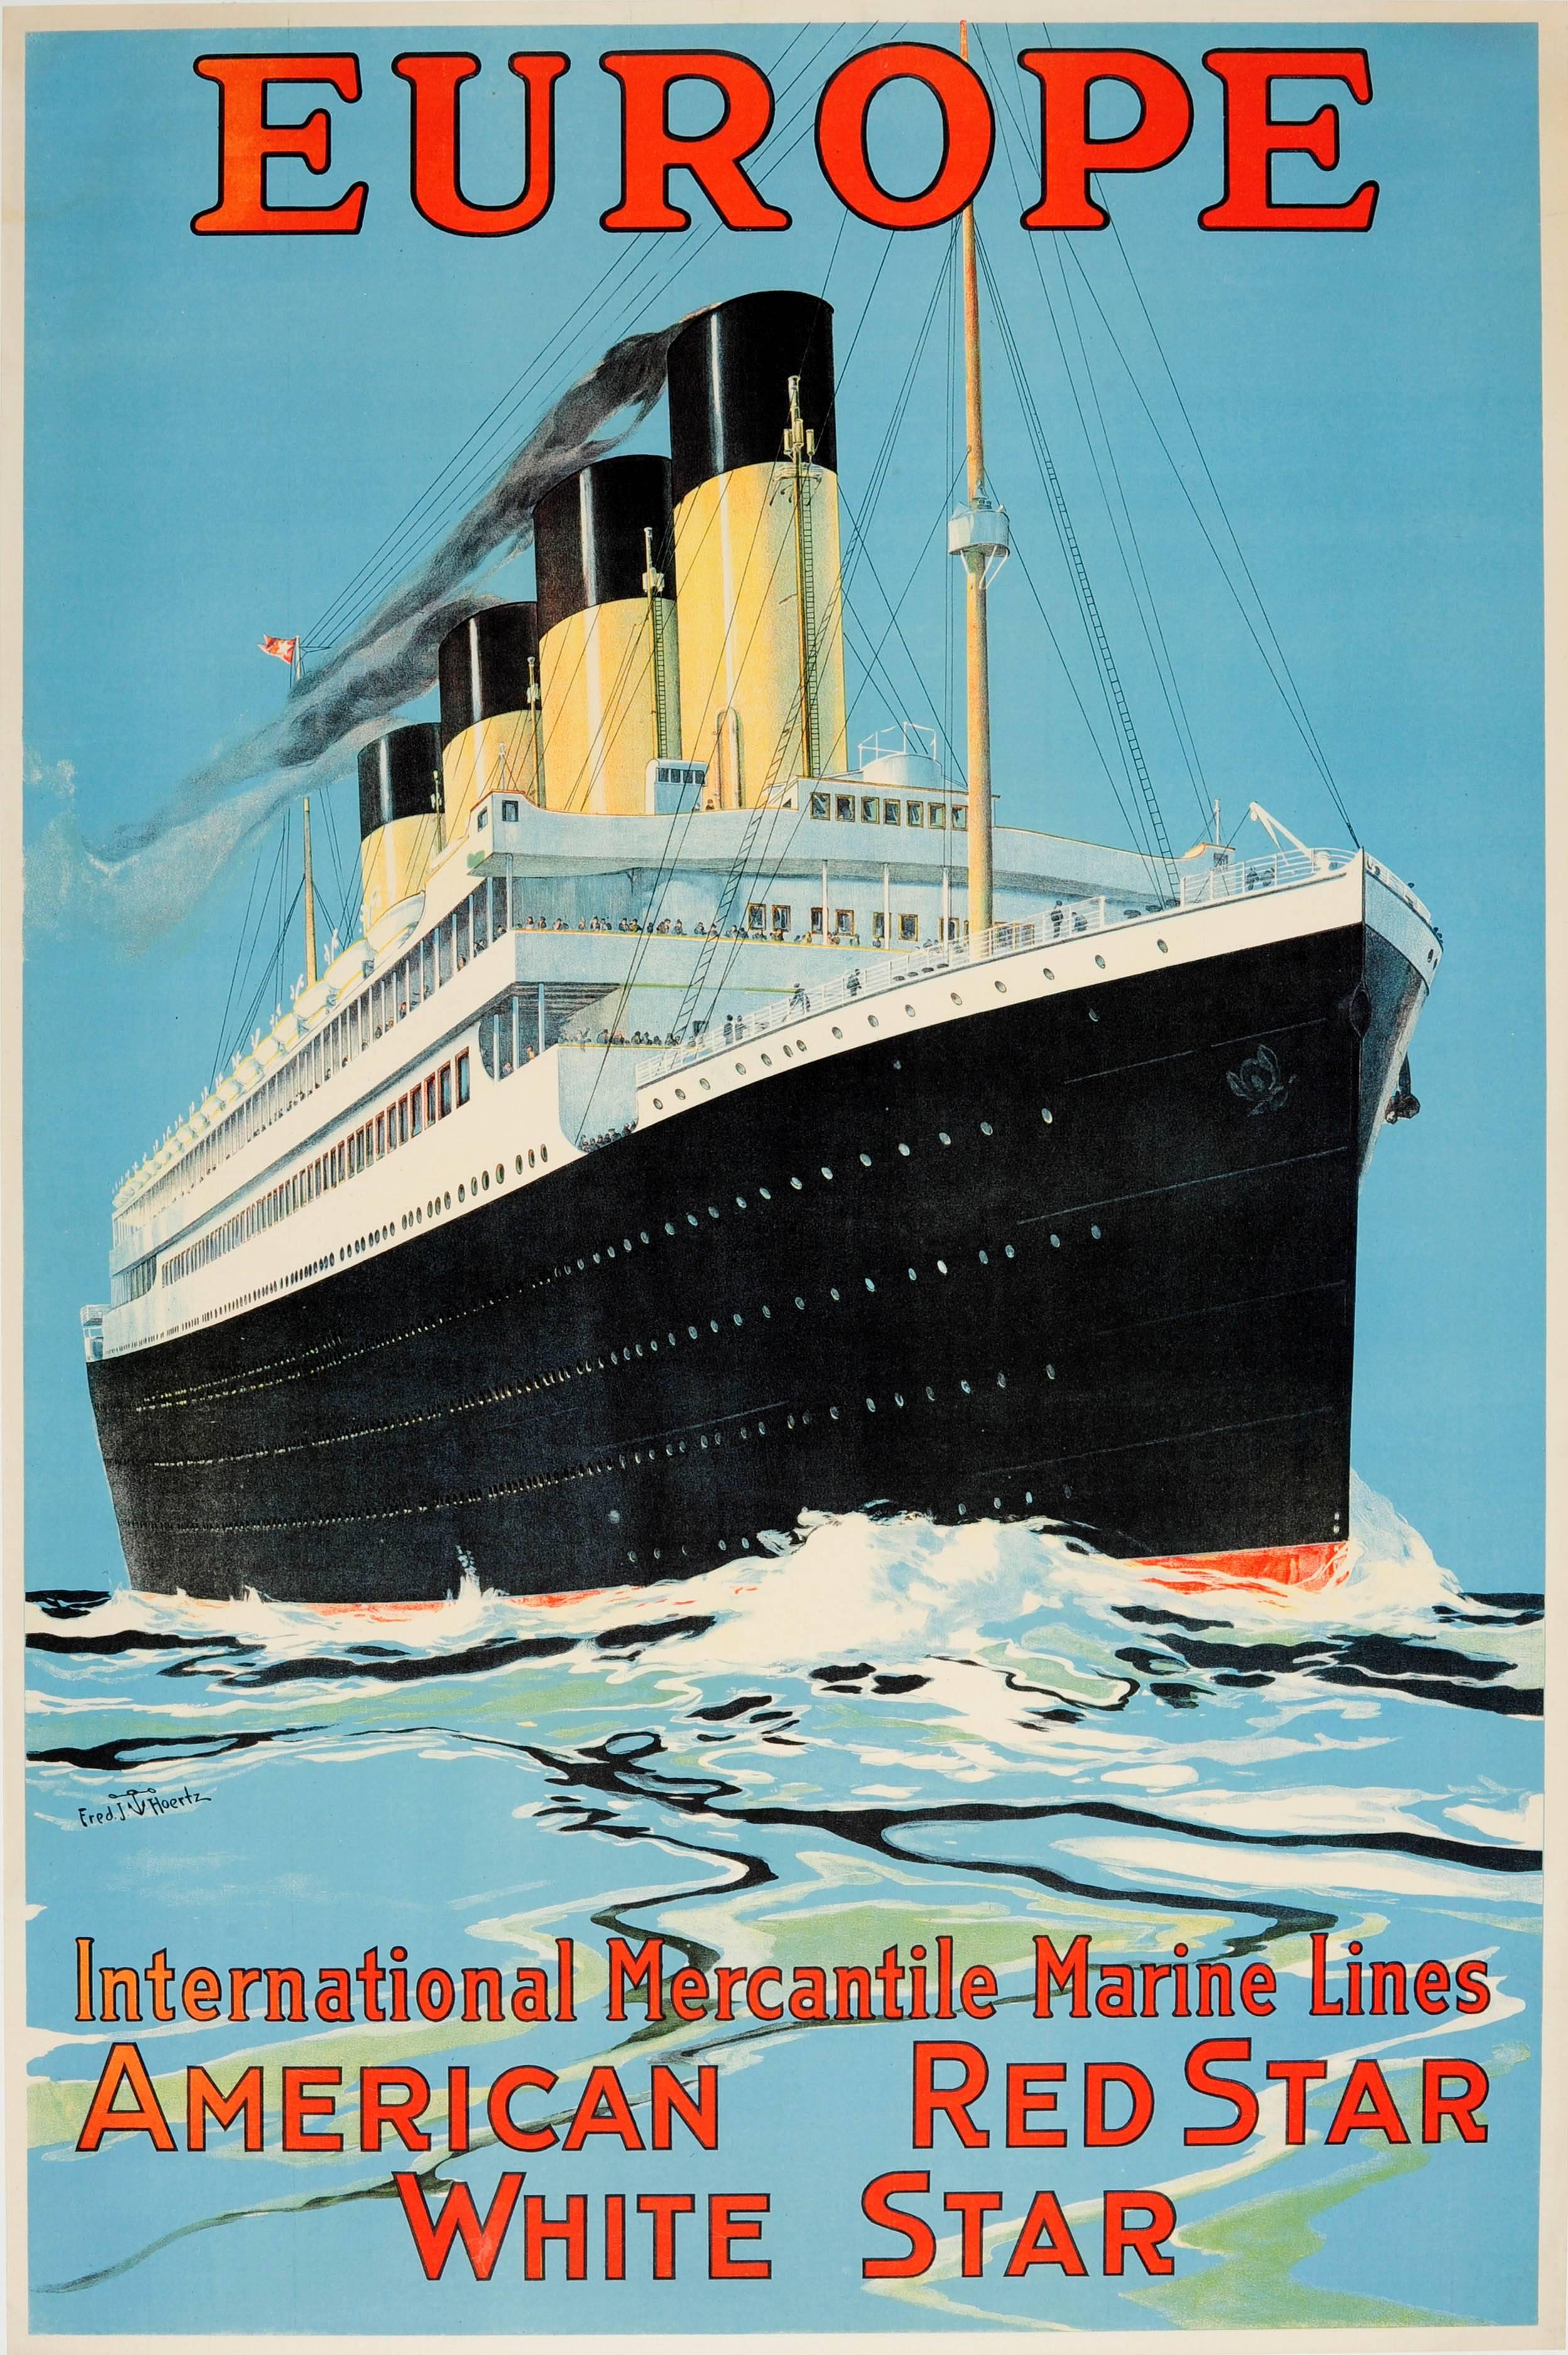 Frederick J. Hoertz Print - Original 1910s Cruise Ship Poster: Europe IMM Lines American Red Star White Star